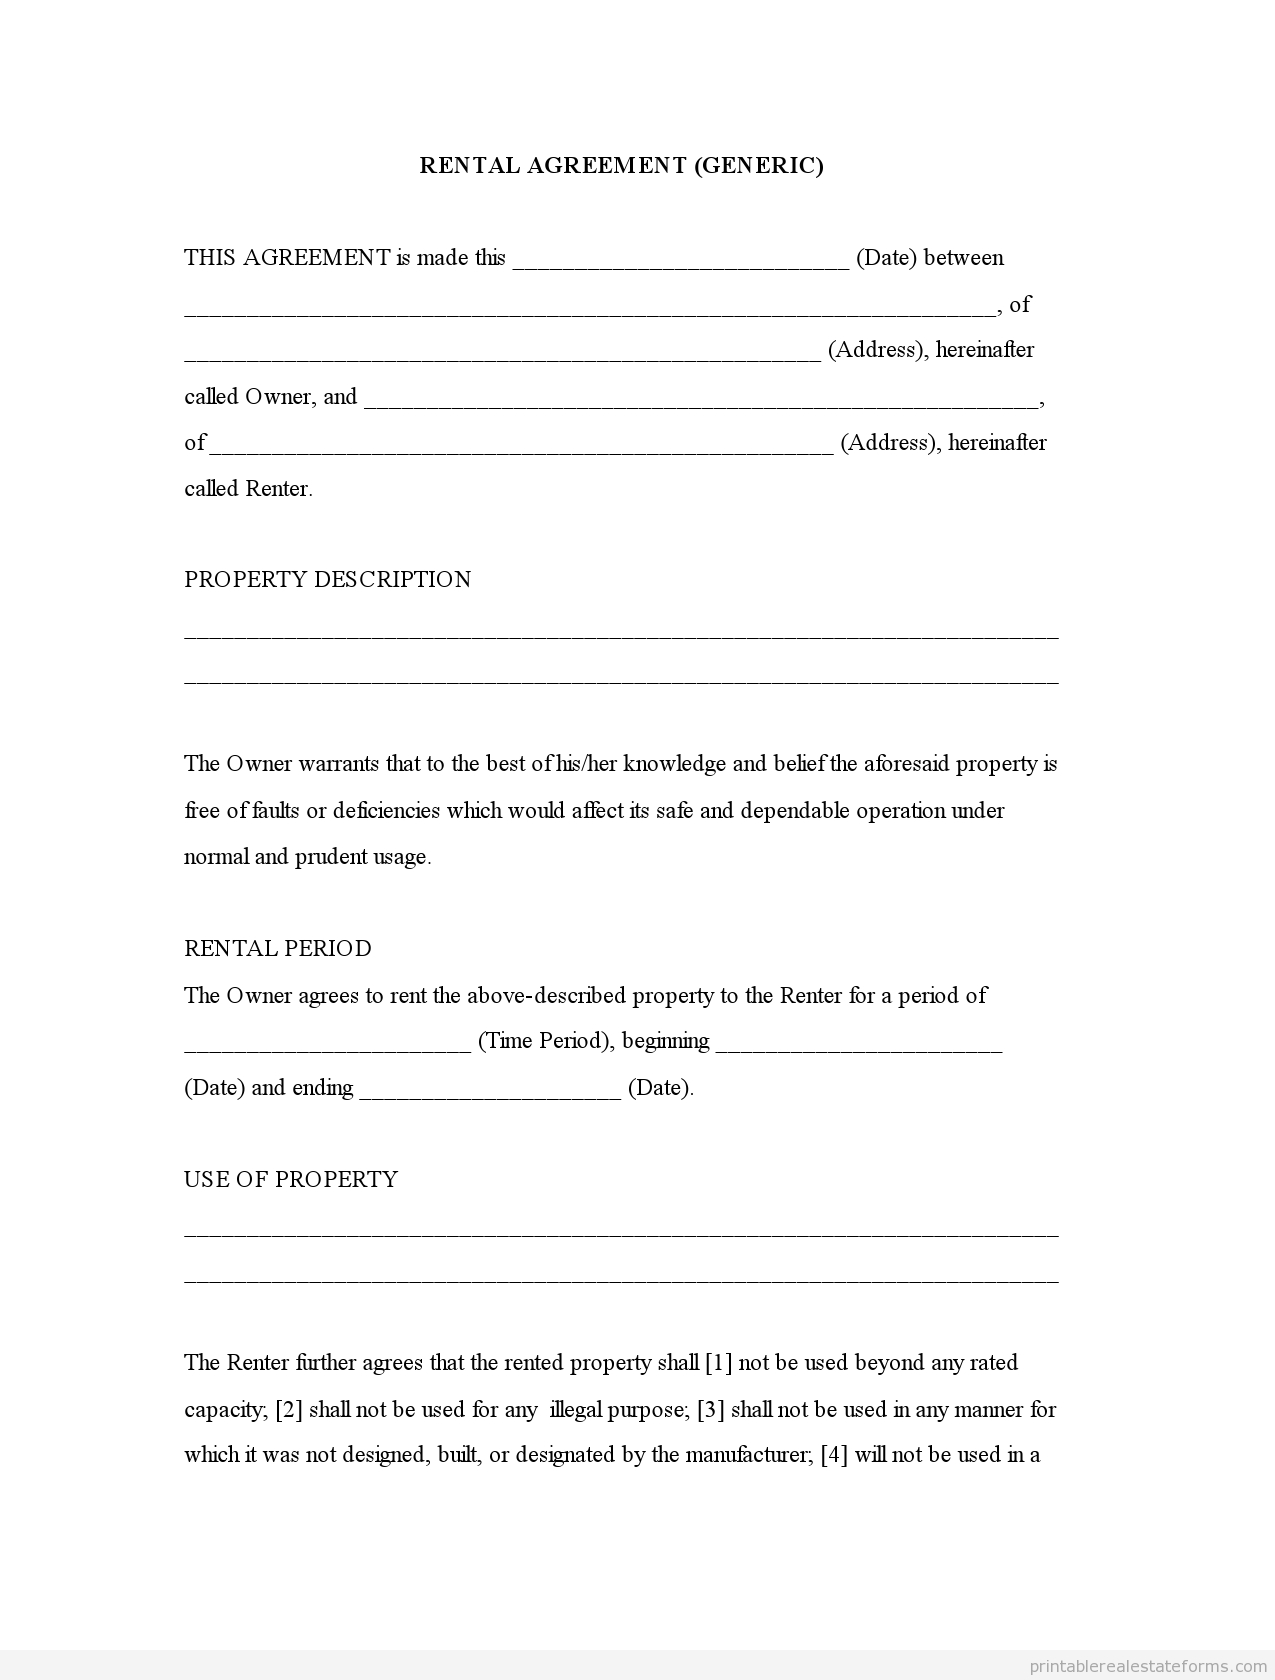 Free Printable Rental Agreement | Rental Agreement (Generic)0001 - Free Printable Rental Agreement